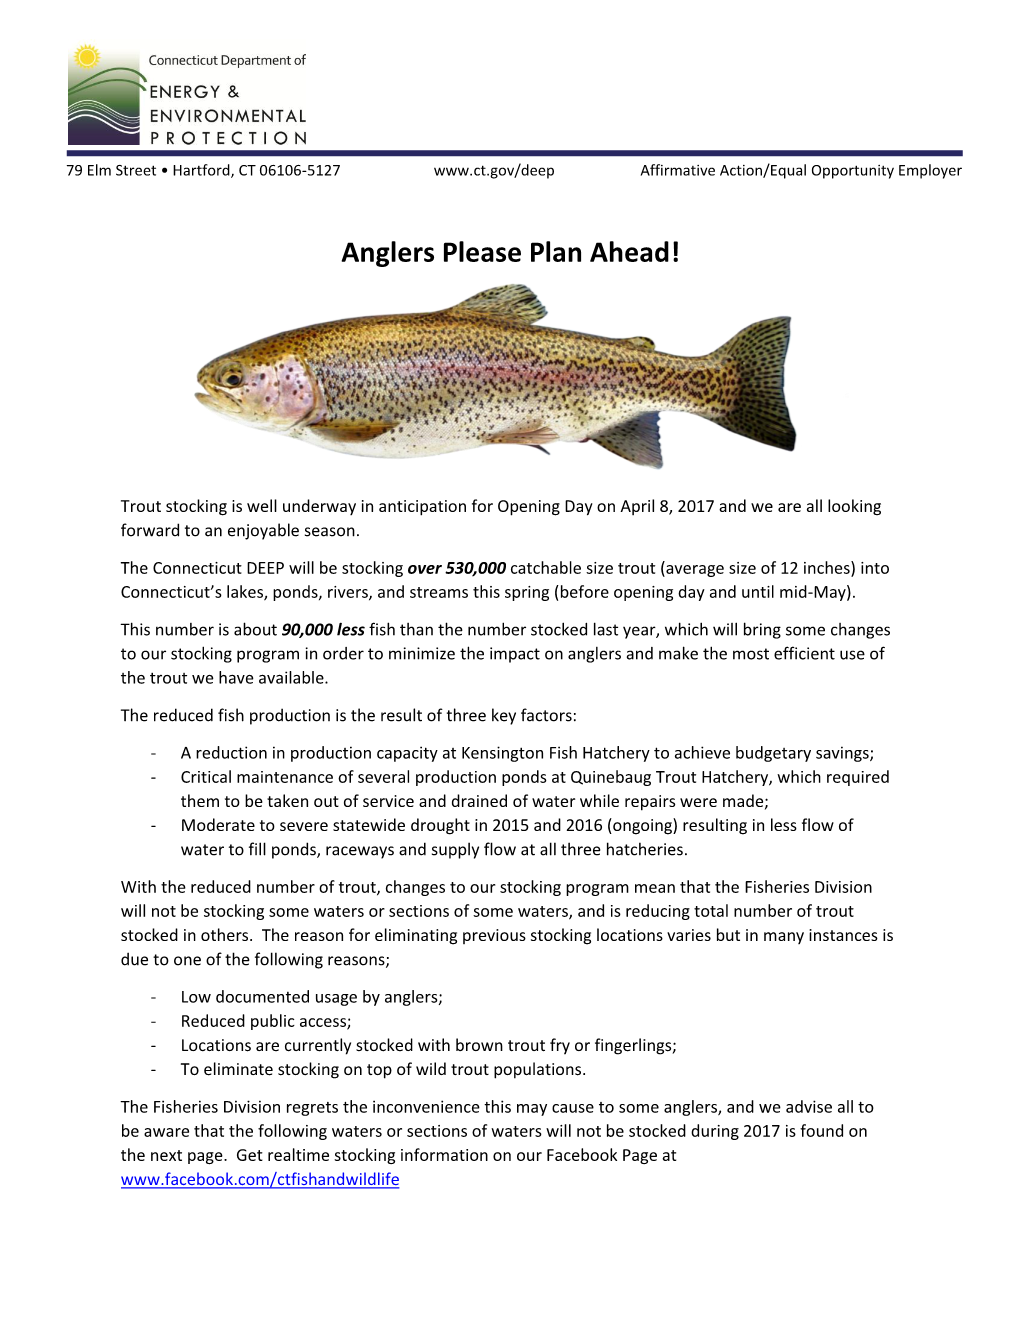 Anglers Please Plan Ahead!